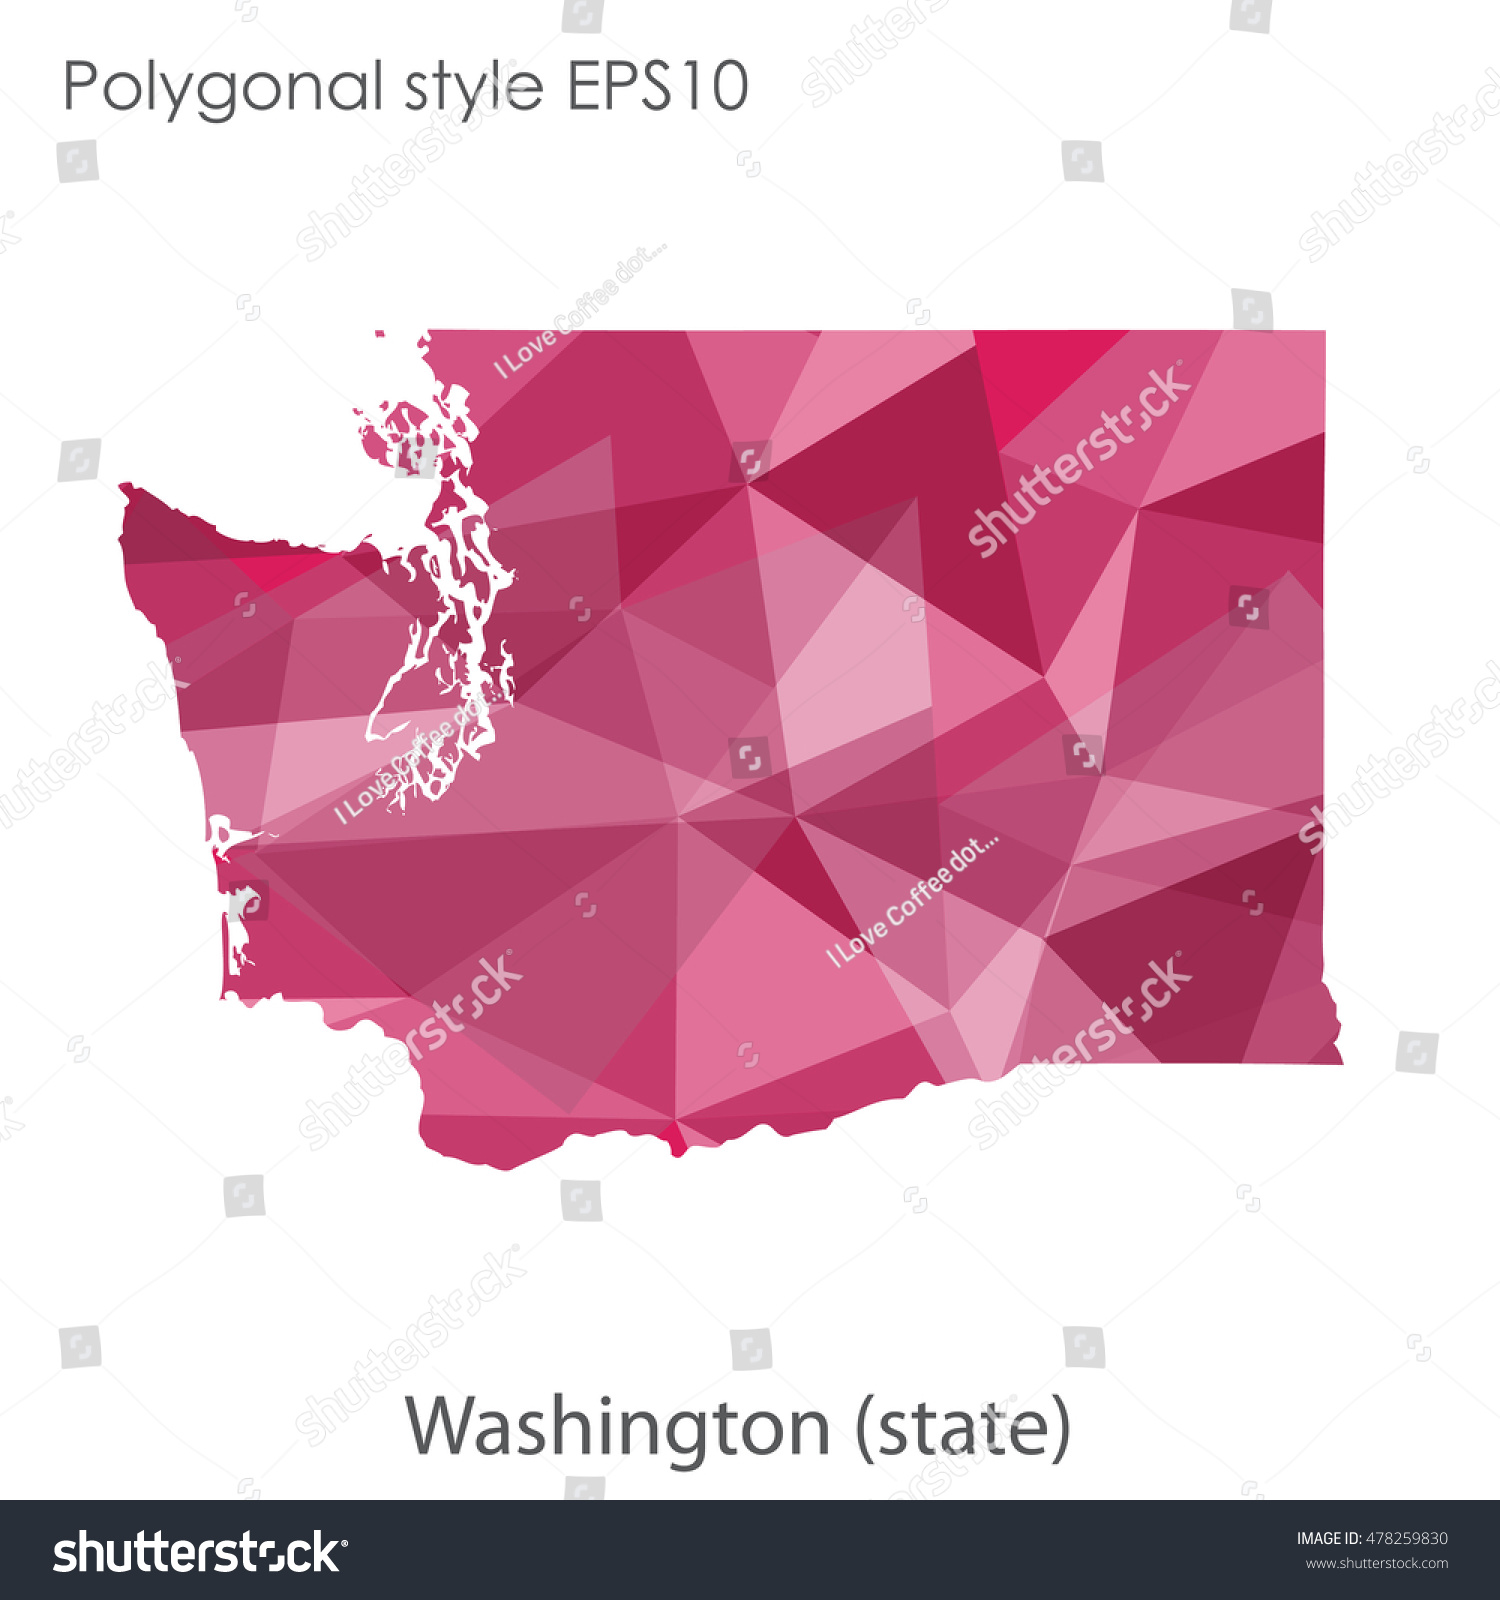 Washington State Map In Geometric Polygonal Royalty Free Stock Vector 478259830 0406